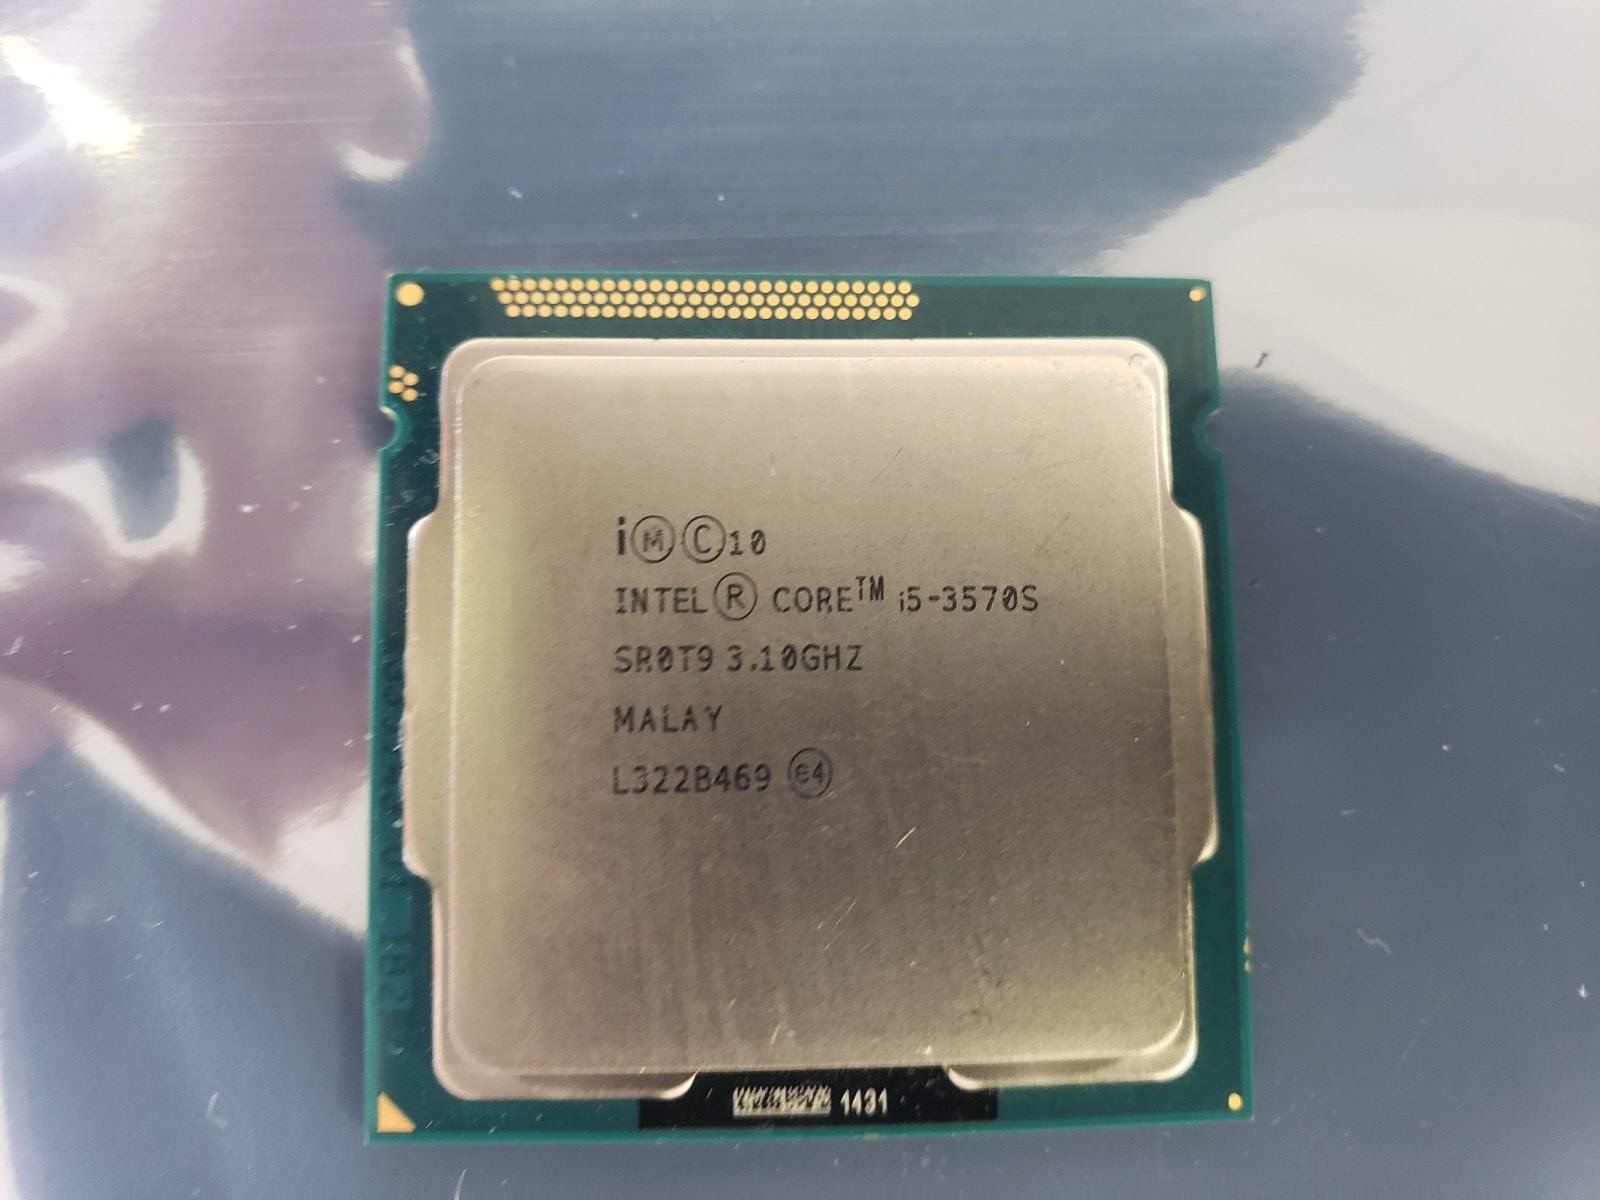 Intel Core i5-3570S 3.1GHz Quad-Core 6MB Socket LGA 1155 SR0T9 CPU Processor 65W